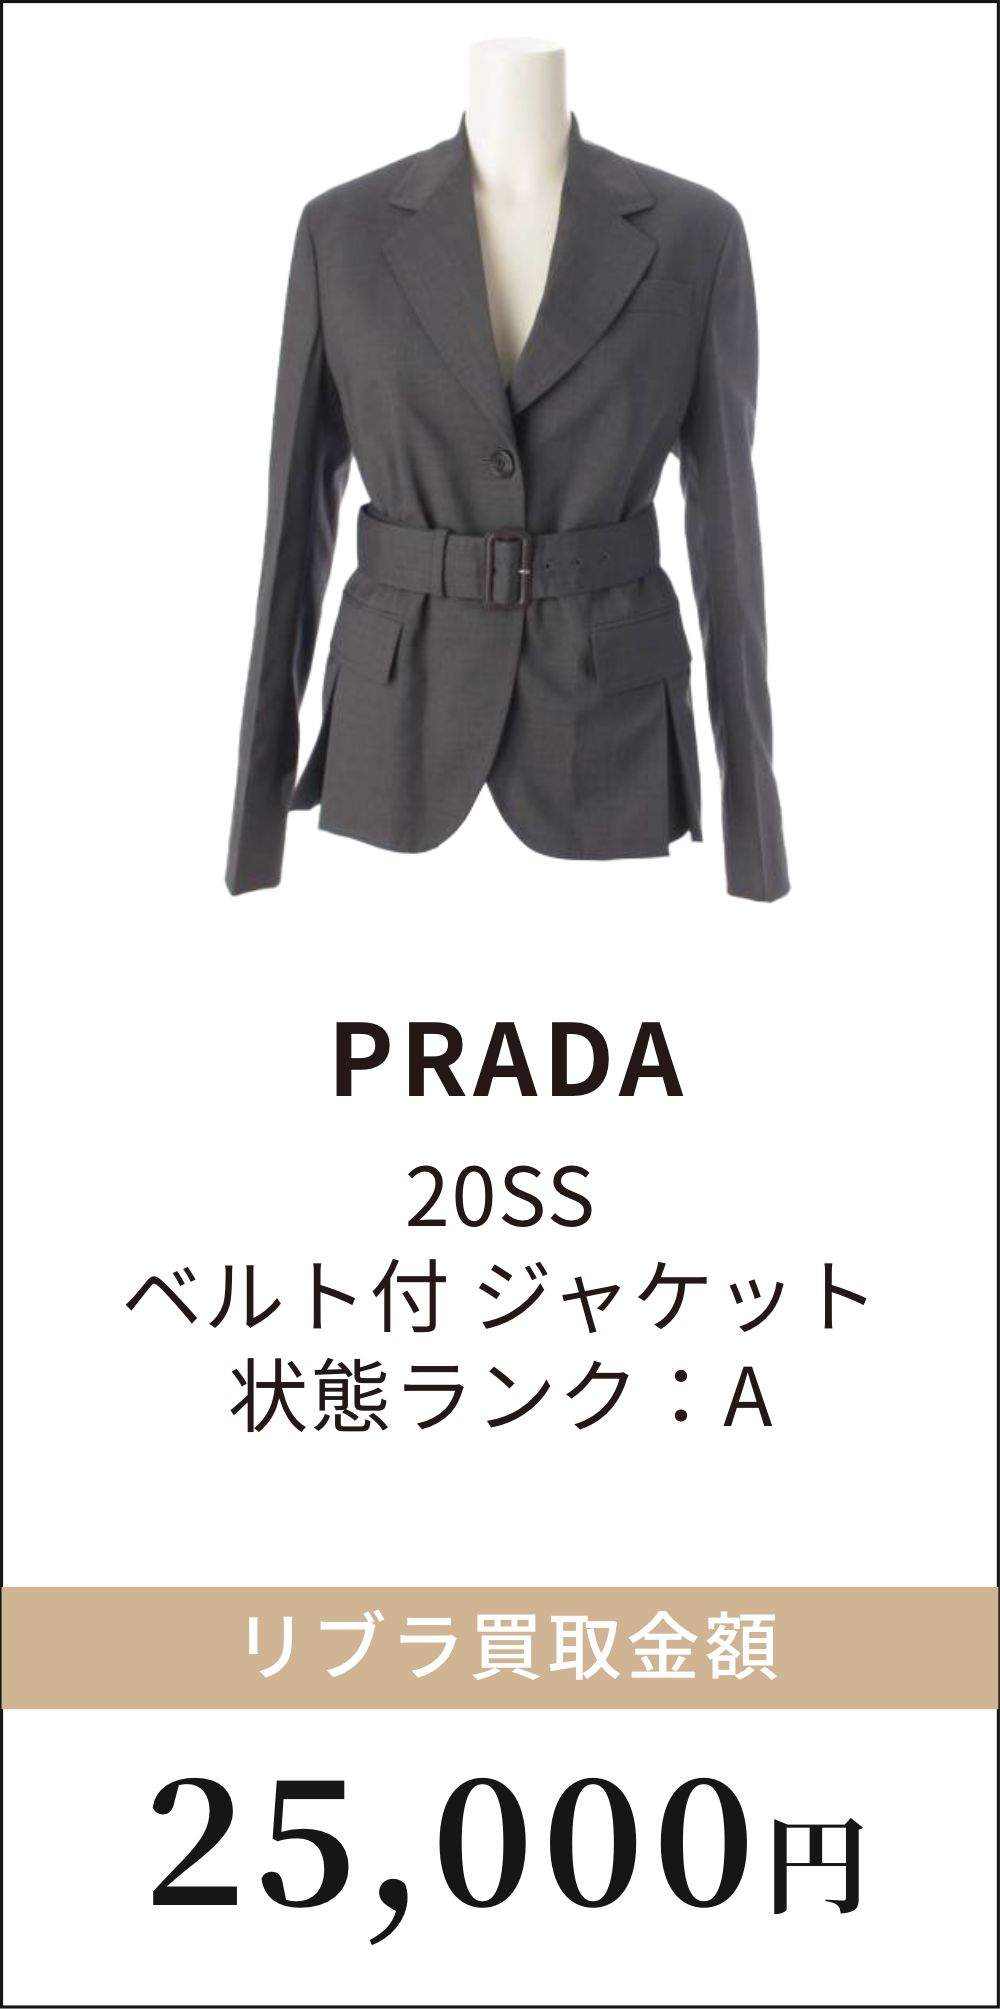 PRADA 20SS ベルト付 ジャケット